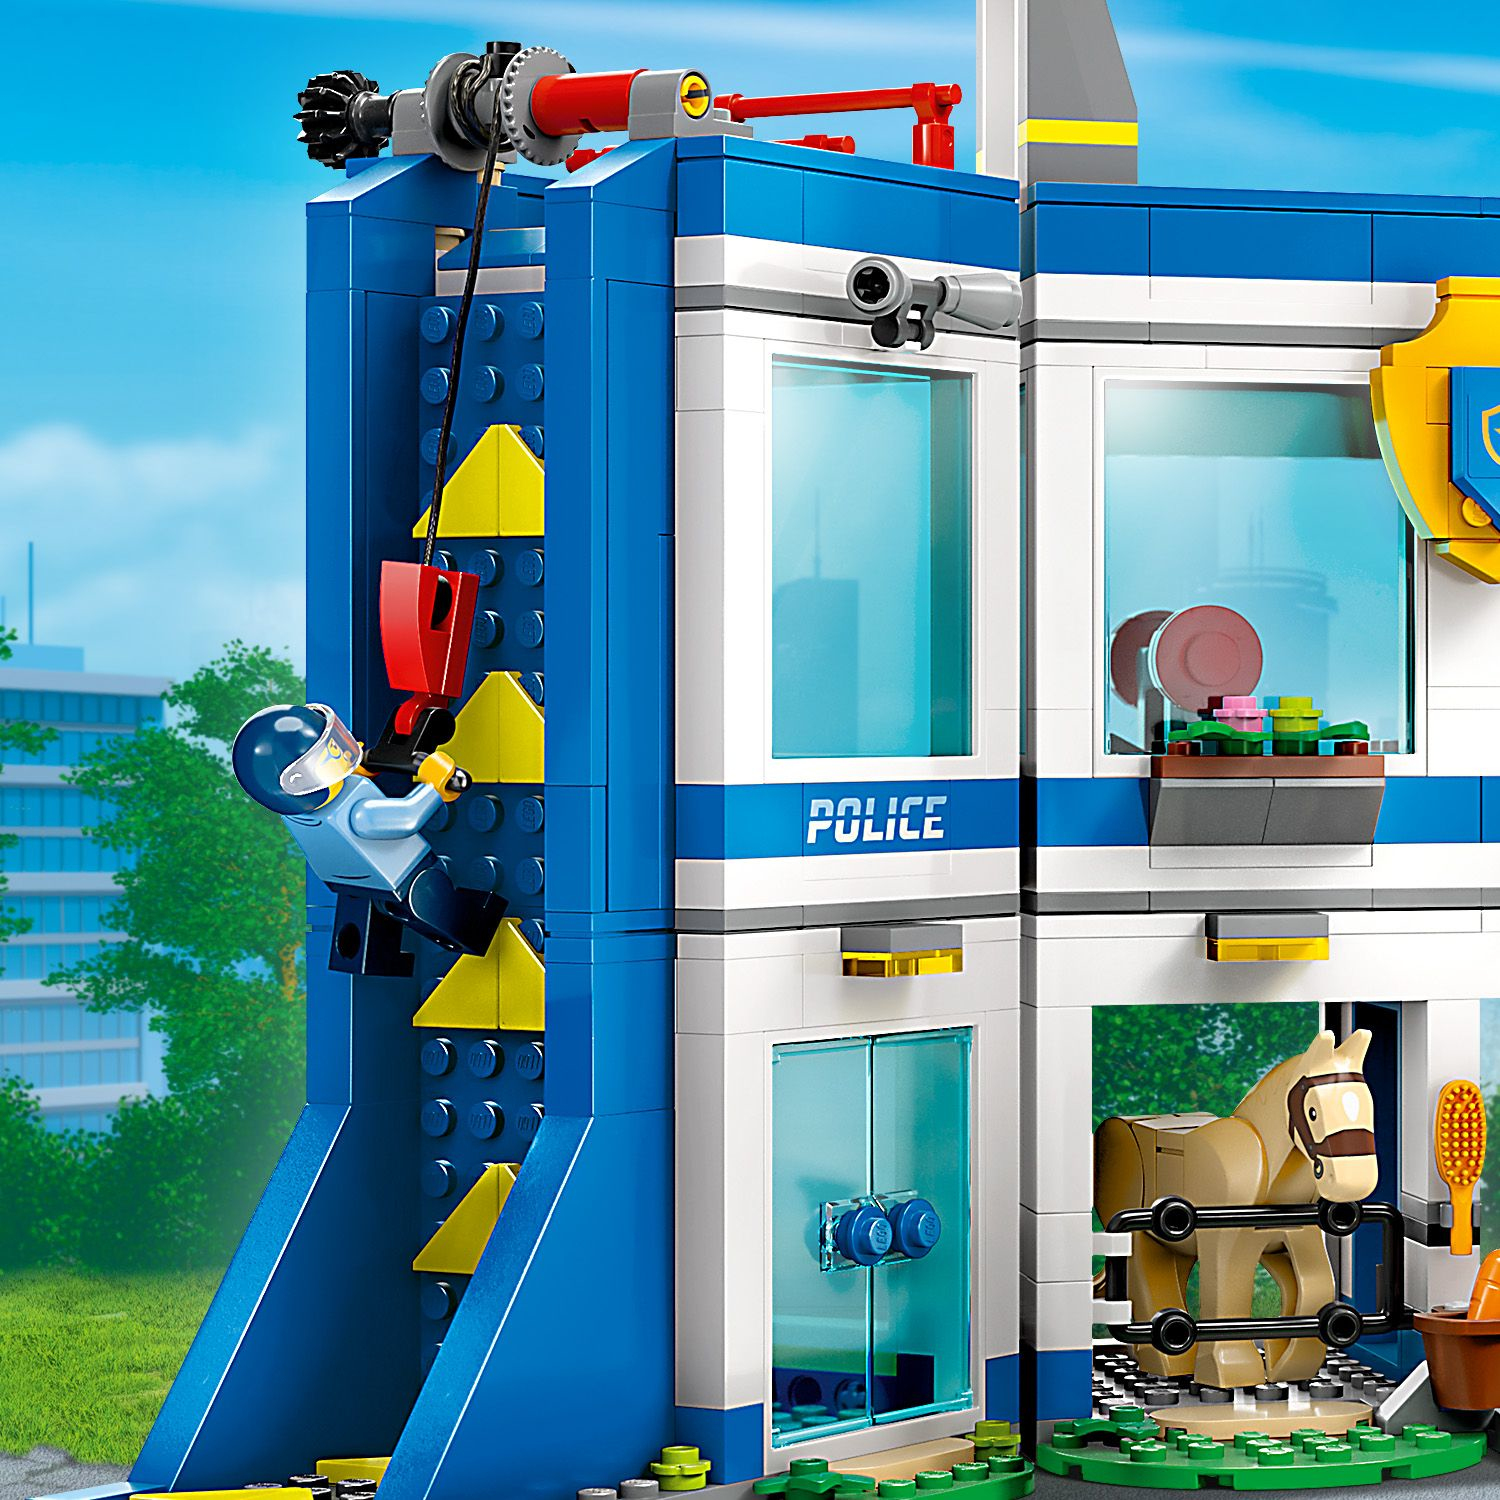 LEGO City: Police Station - The Toy Box Hanover